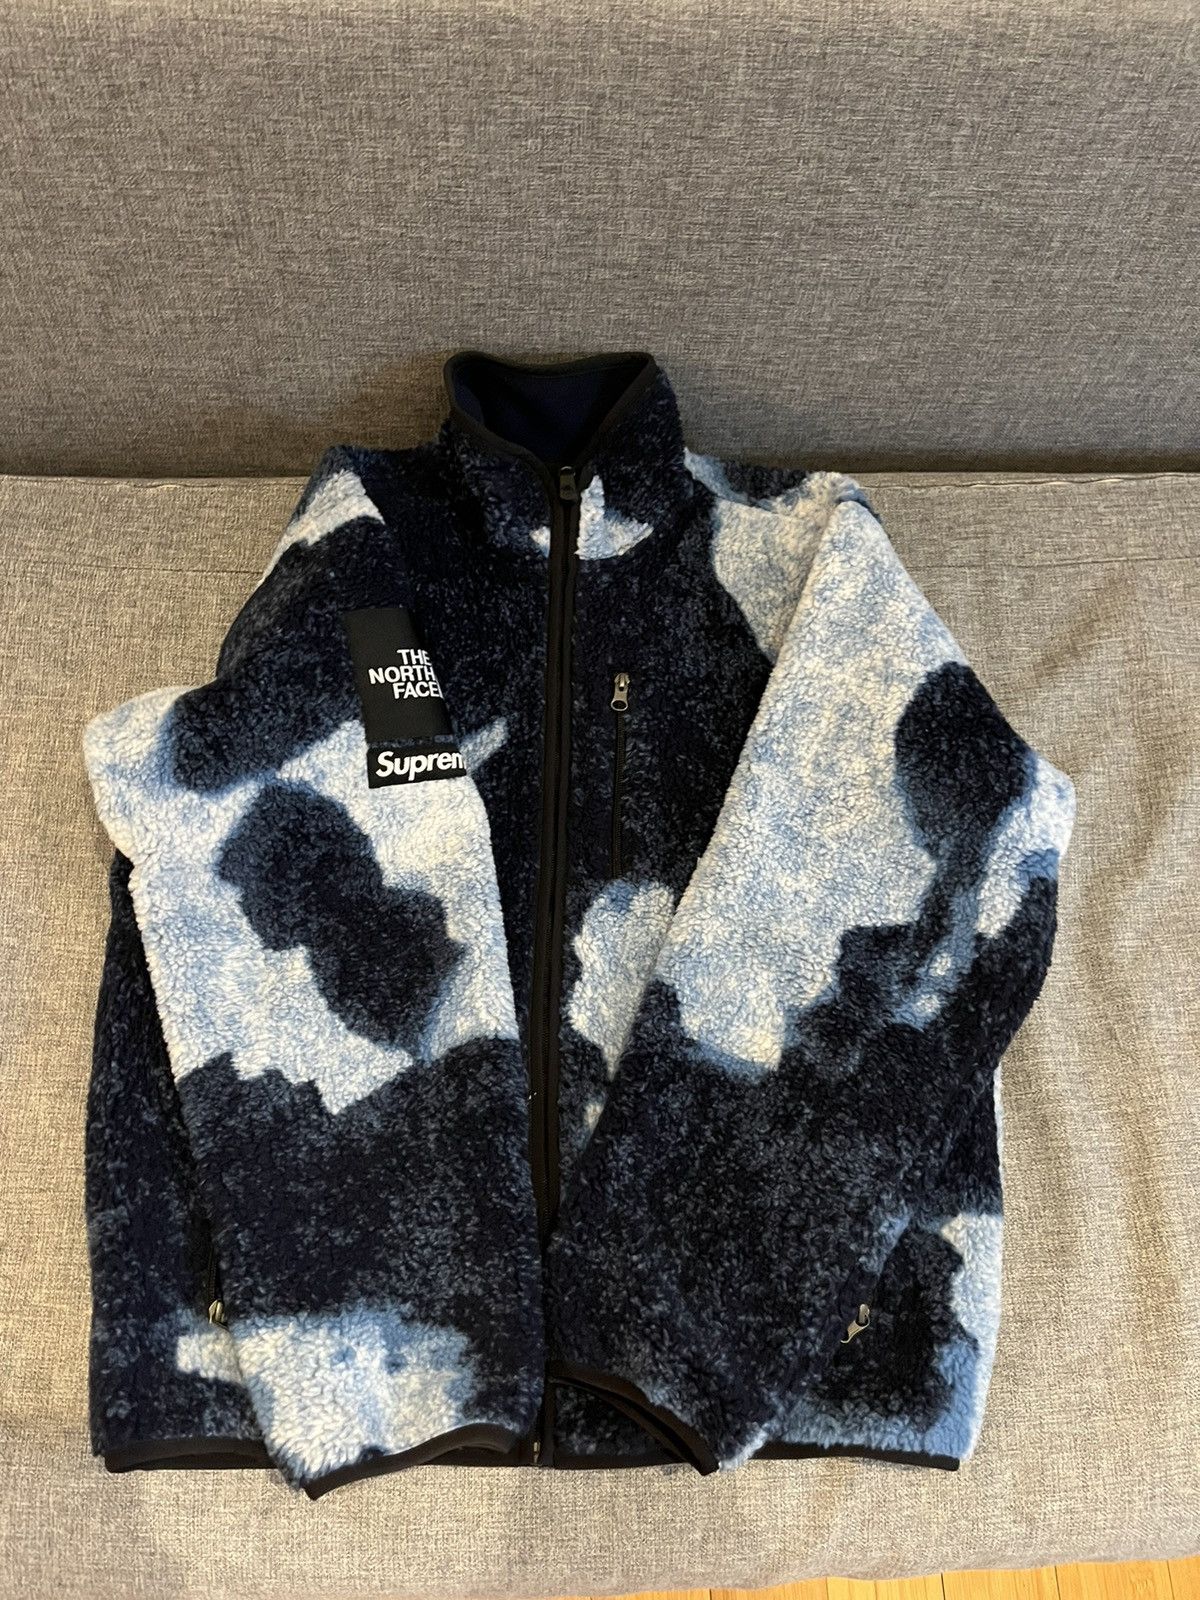 Supreme Supreme x north face bleached fleece jacket size medium | Grailed